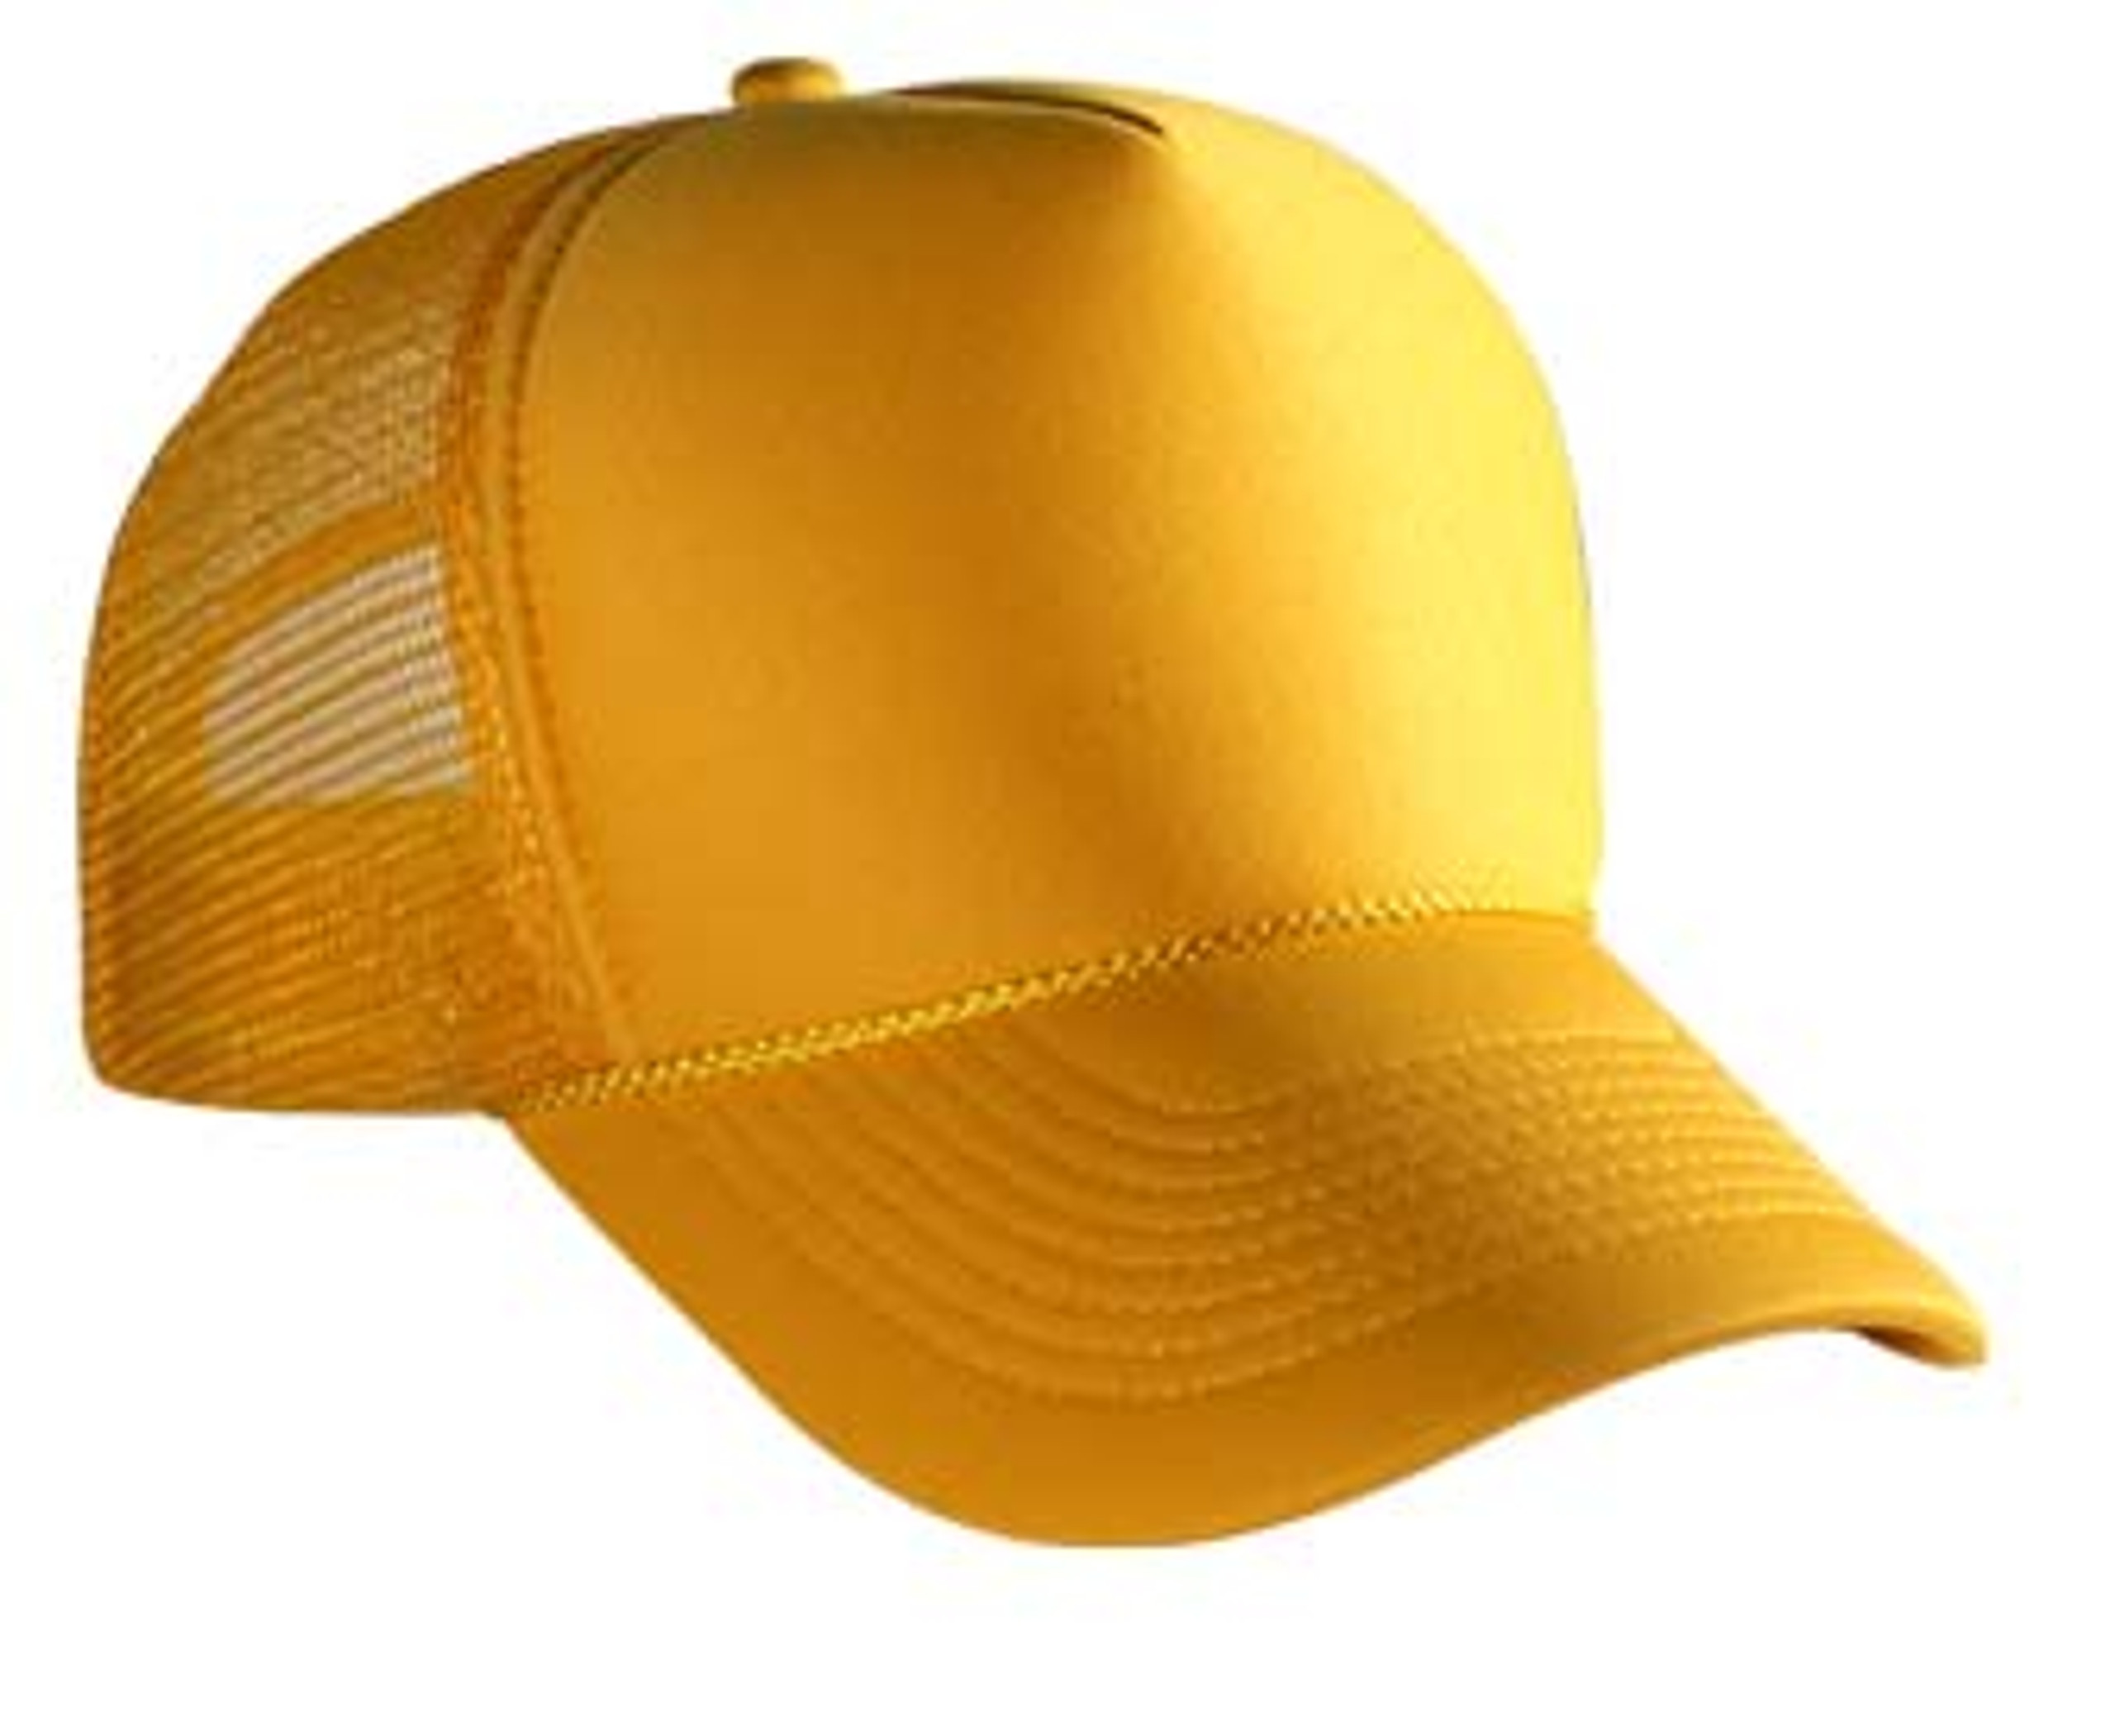 SOLID YELLOW Hat, Blank Hats, Plain Hats, Trucker Hats